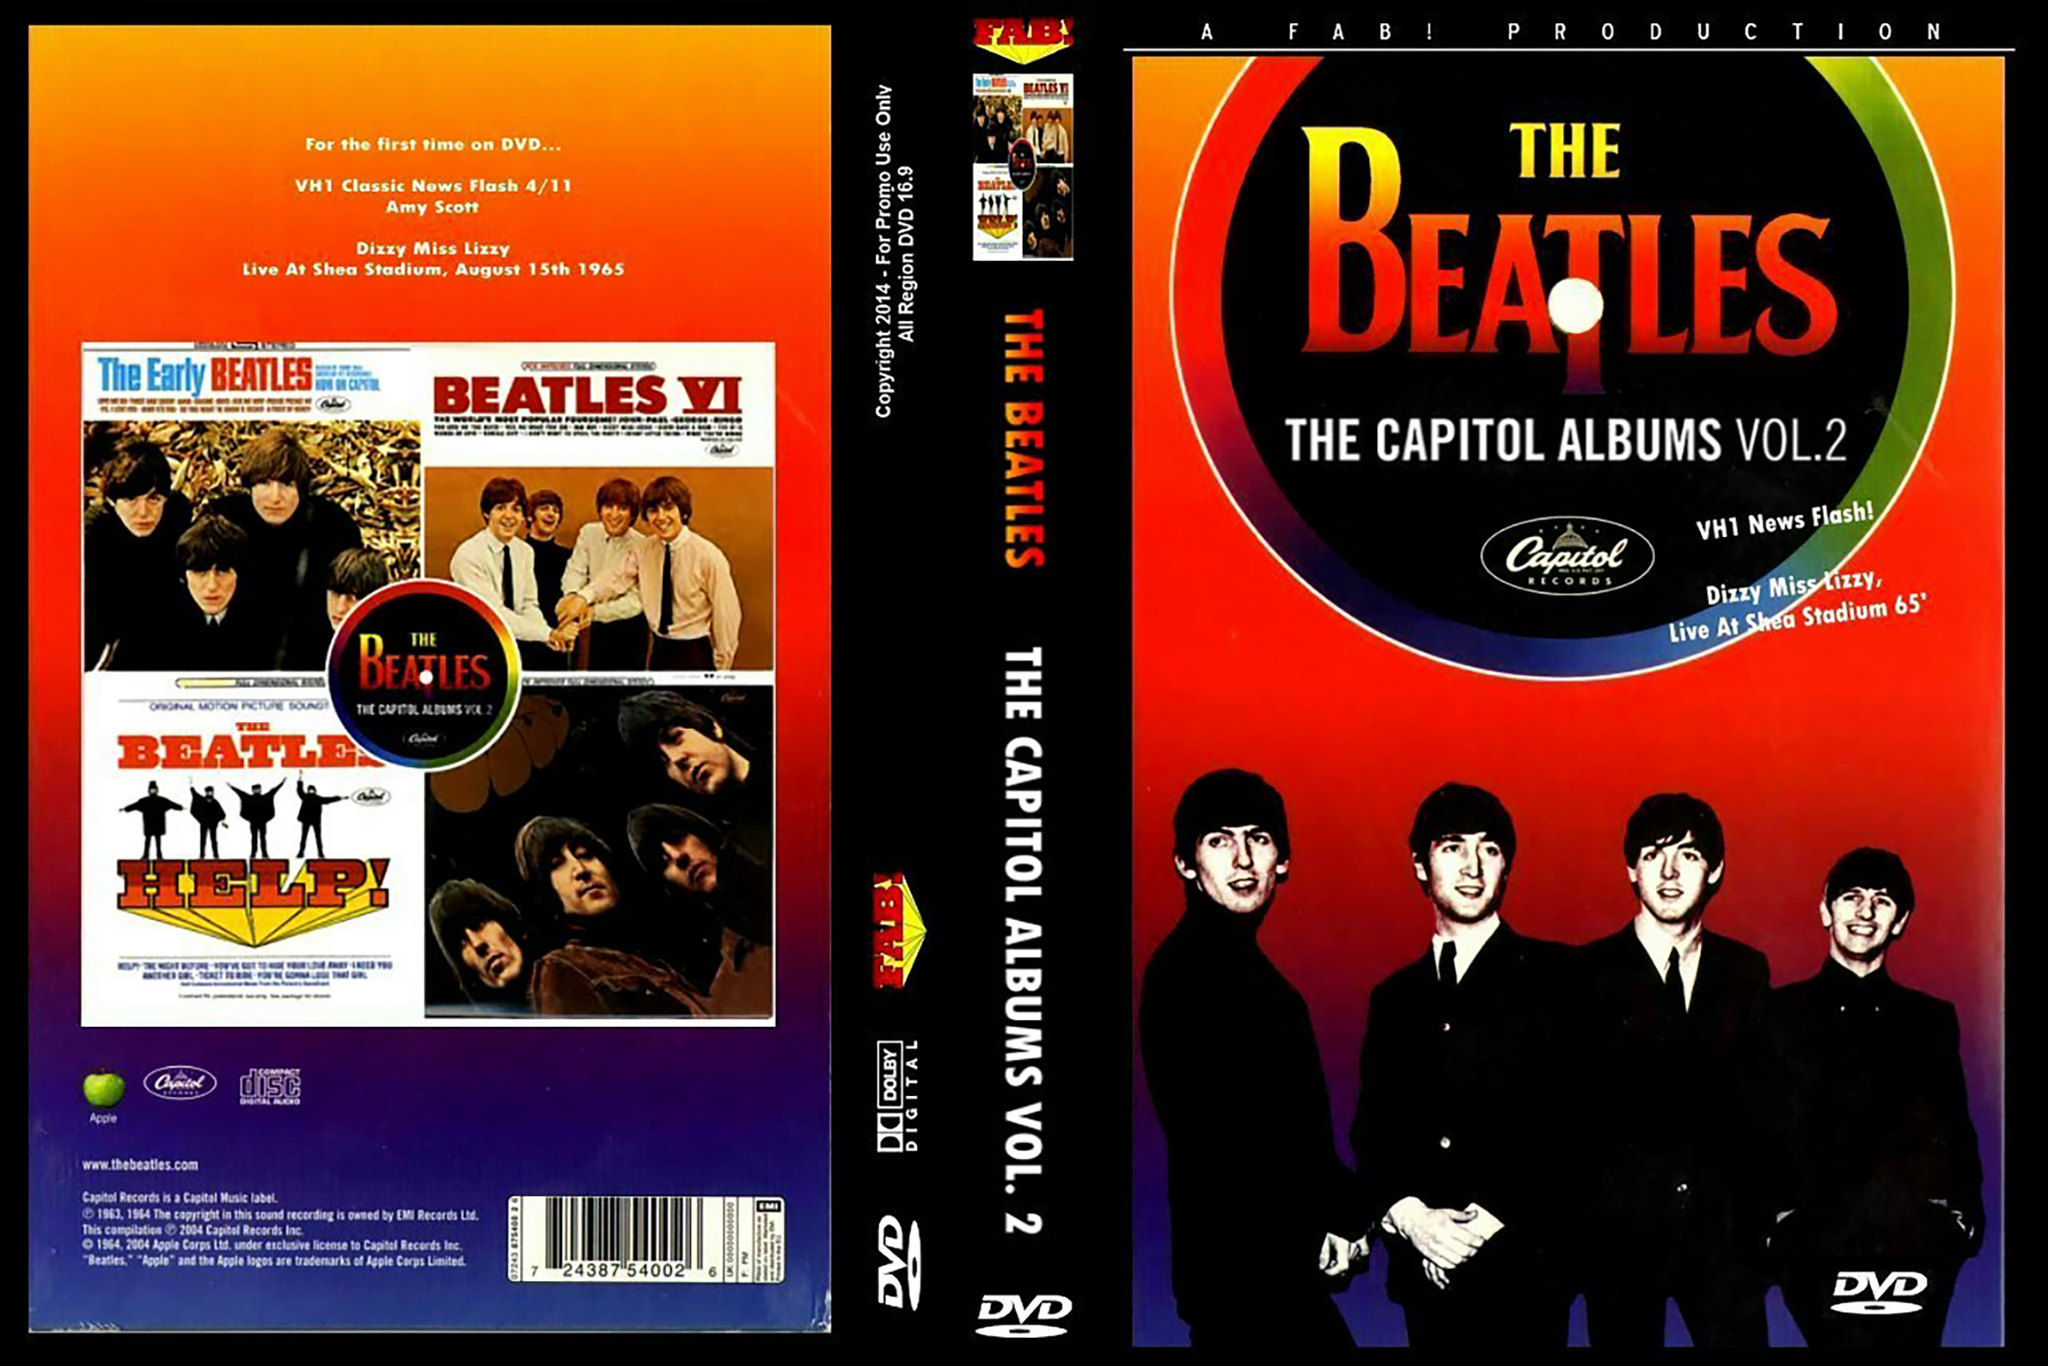 The Beatles - The Capitol Albums Vol.2.jpg